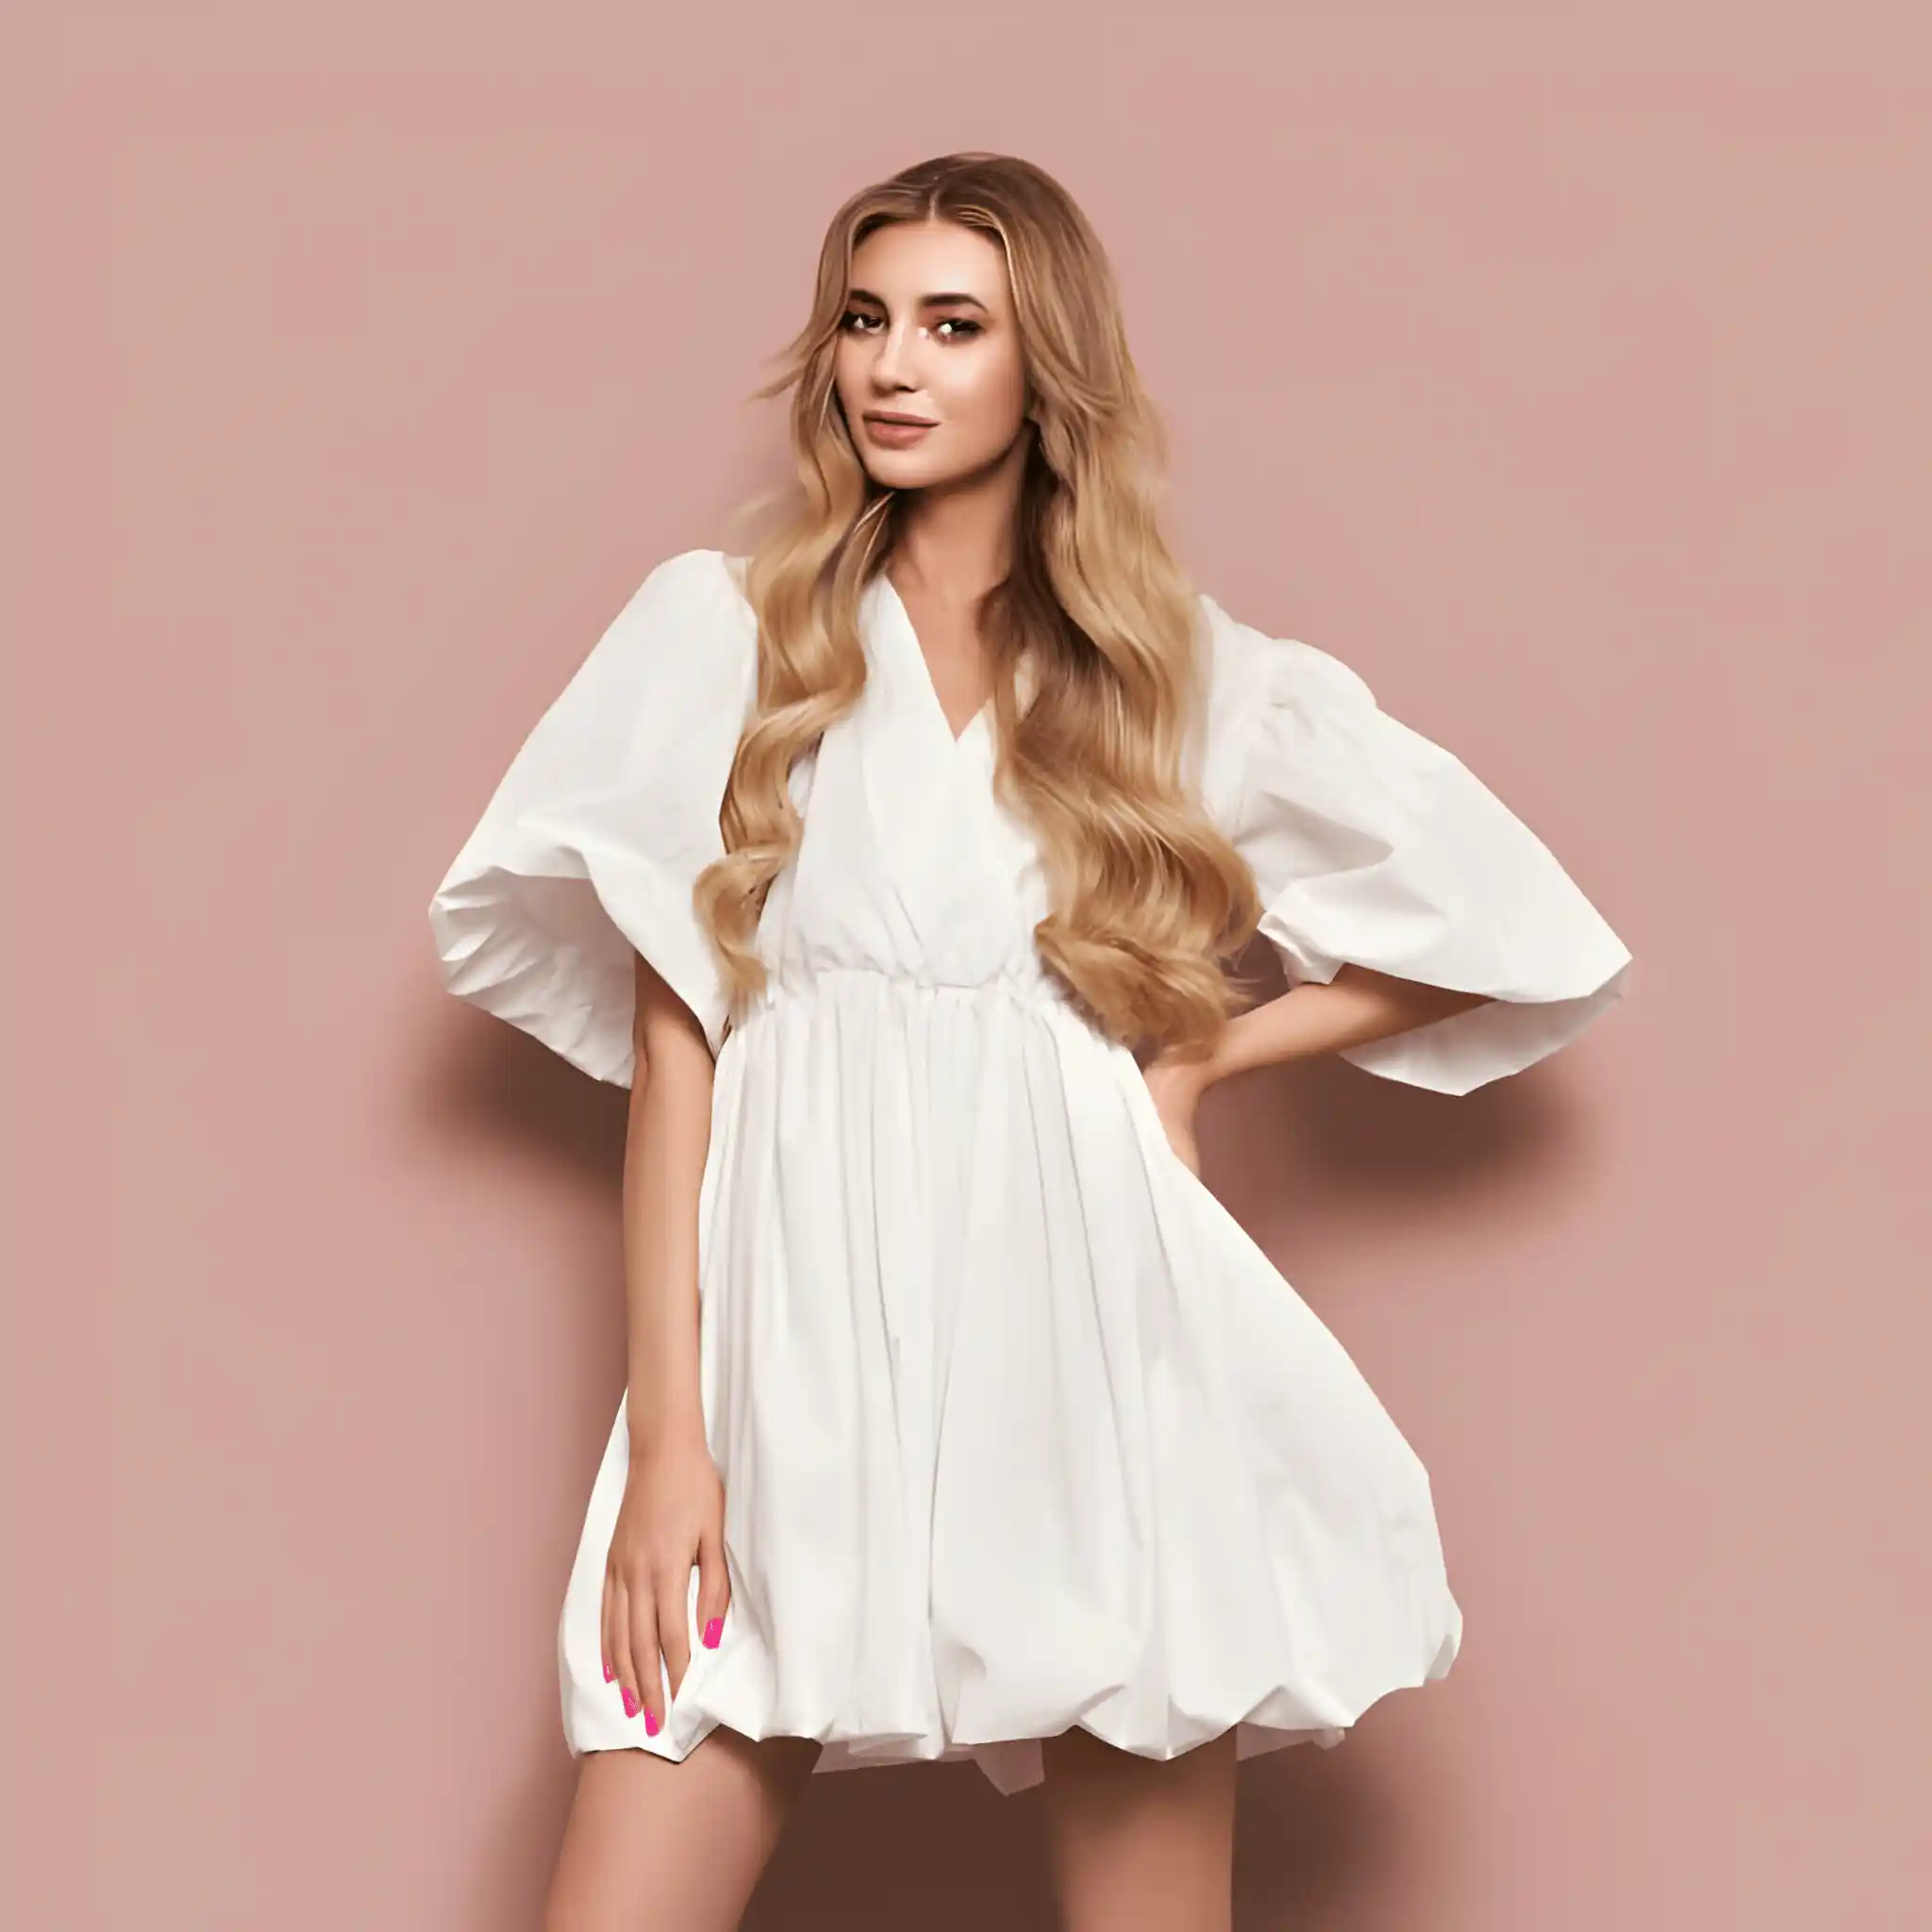 Female model wearing a white dress.